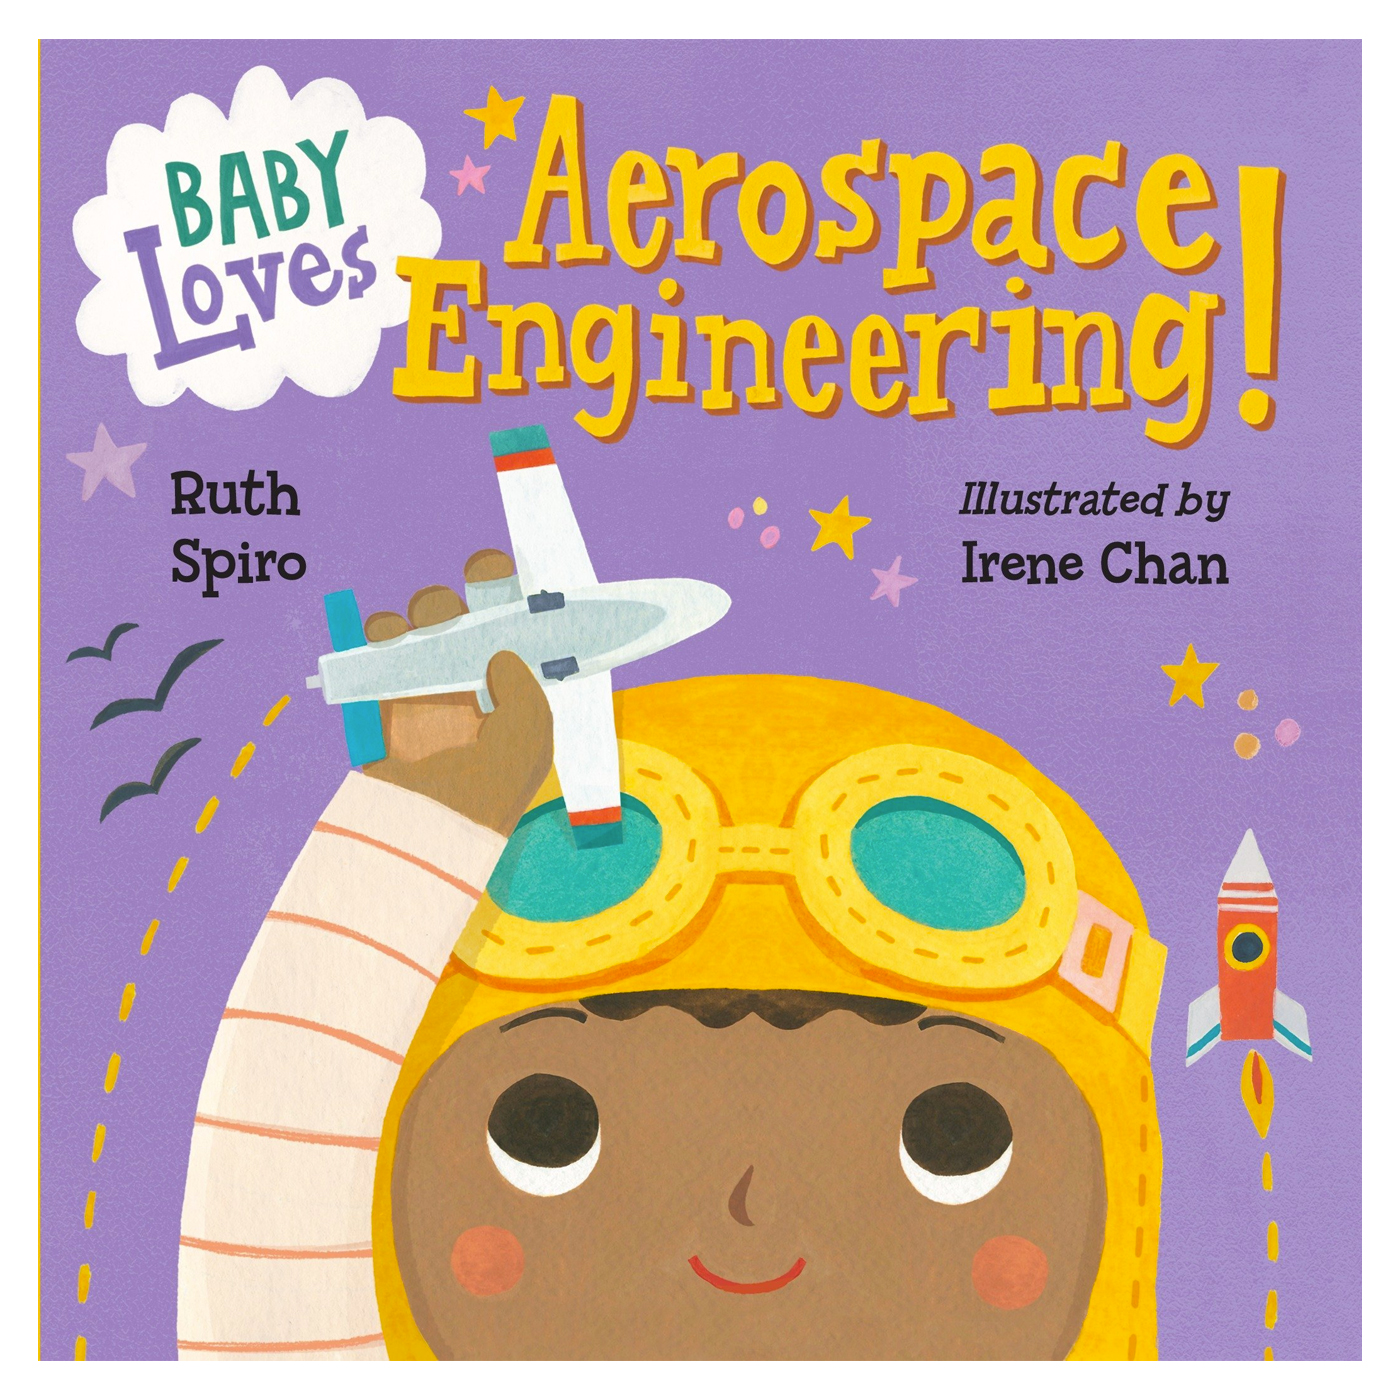  Baby Loves Aerospace Engineering